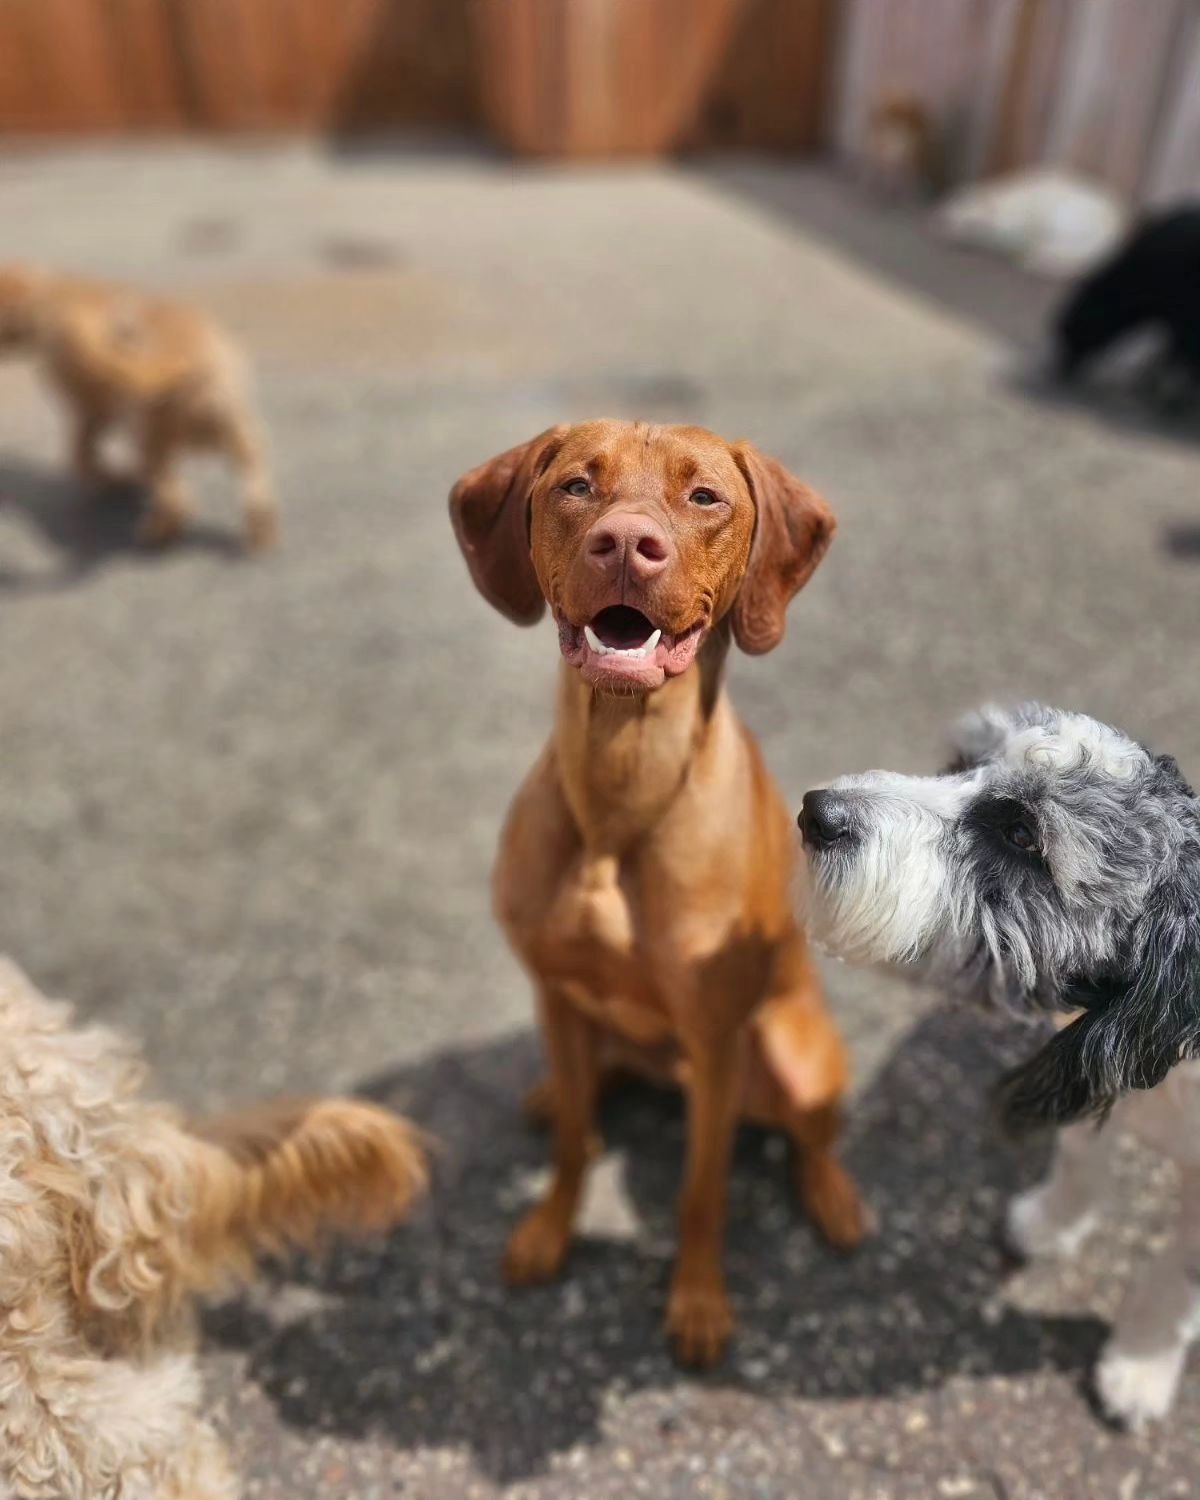 Bosco, Indy &amp; Dottie, Ciabatta, Prince, Dotty 🐾

#dogsofinstagram #dog_features #dogstagram #petstagram #petsofig #rufflovedogs #dogpictures #dogloversofinstagram #cutedogs #cutedogsofig #happydog #happydogs #springtime